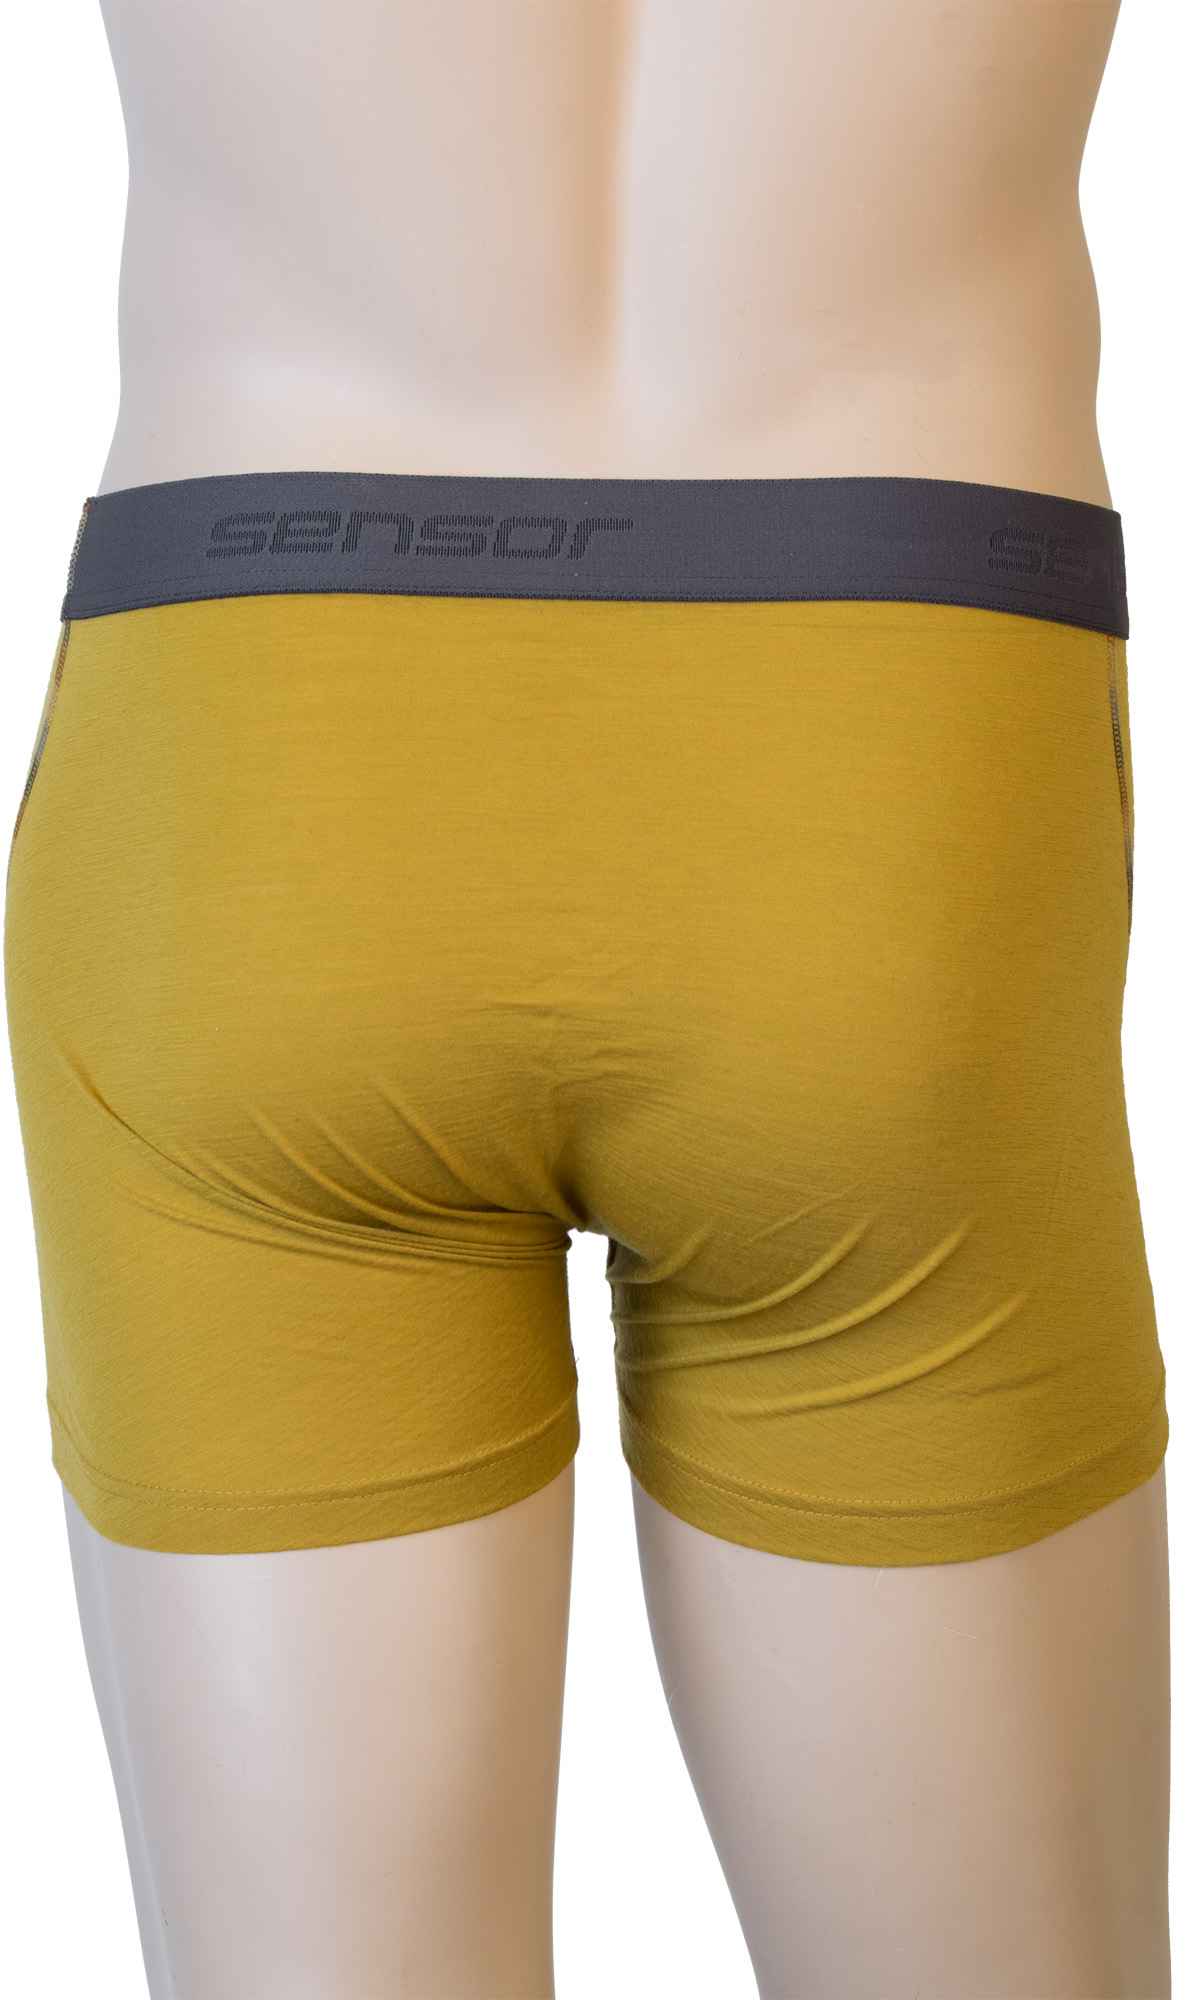 Men’s functional boxer shorts